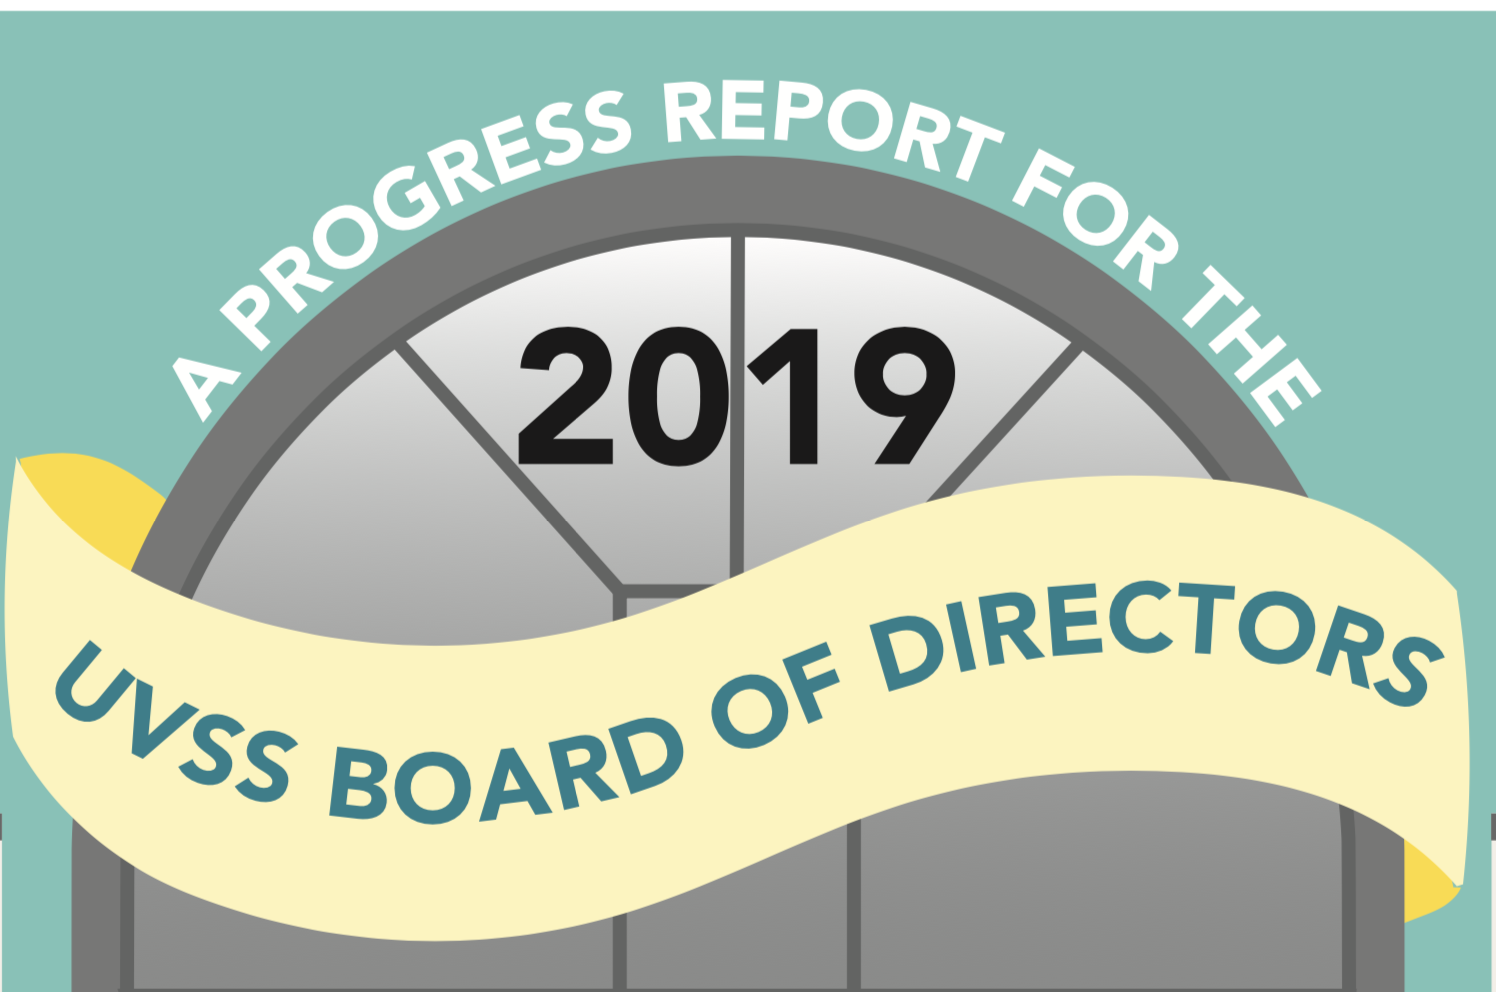 A progress report for the 2019 UVSS Board of Directors